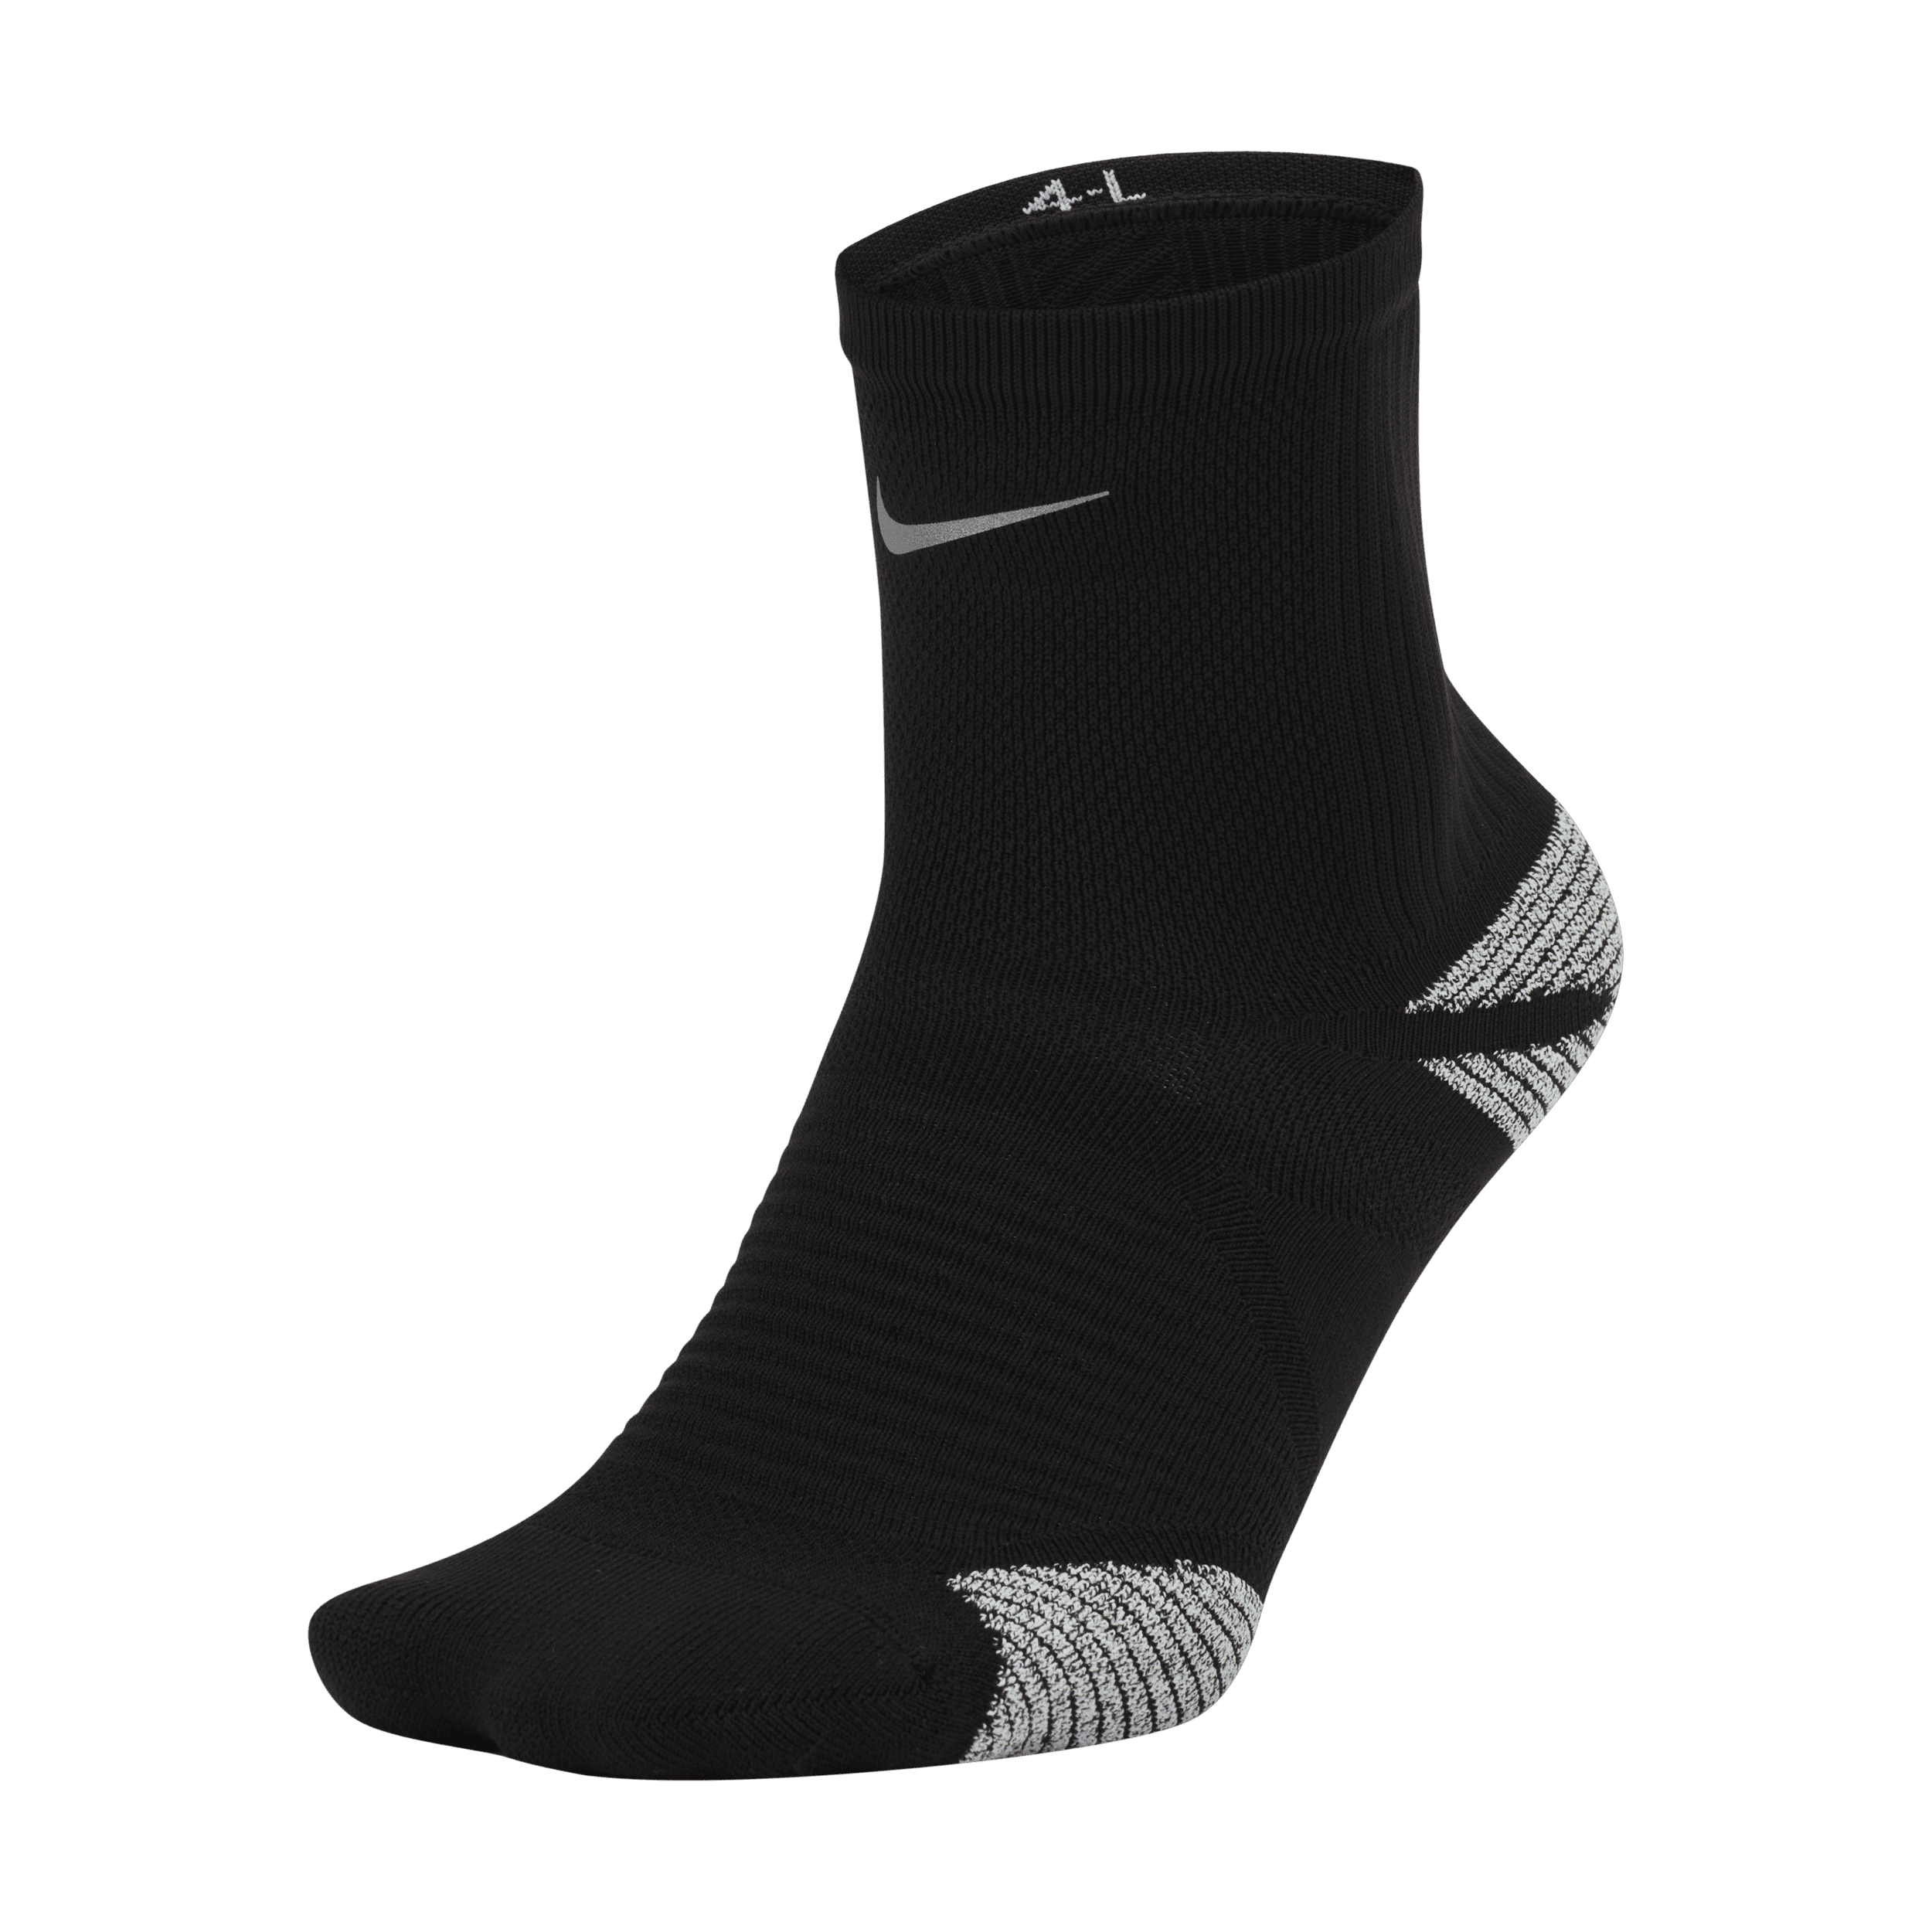 Nike Racing Calcetines hasta el tobillo - Negro